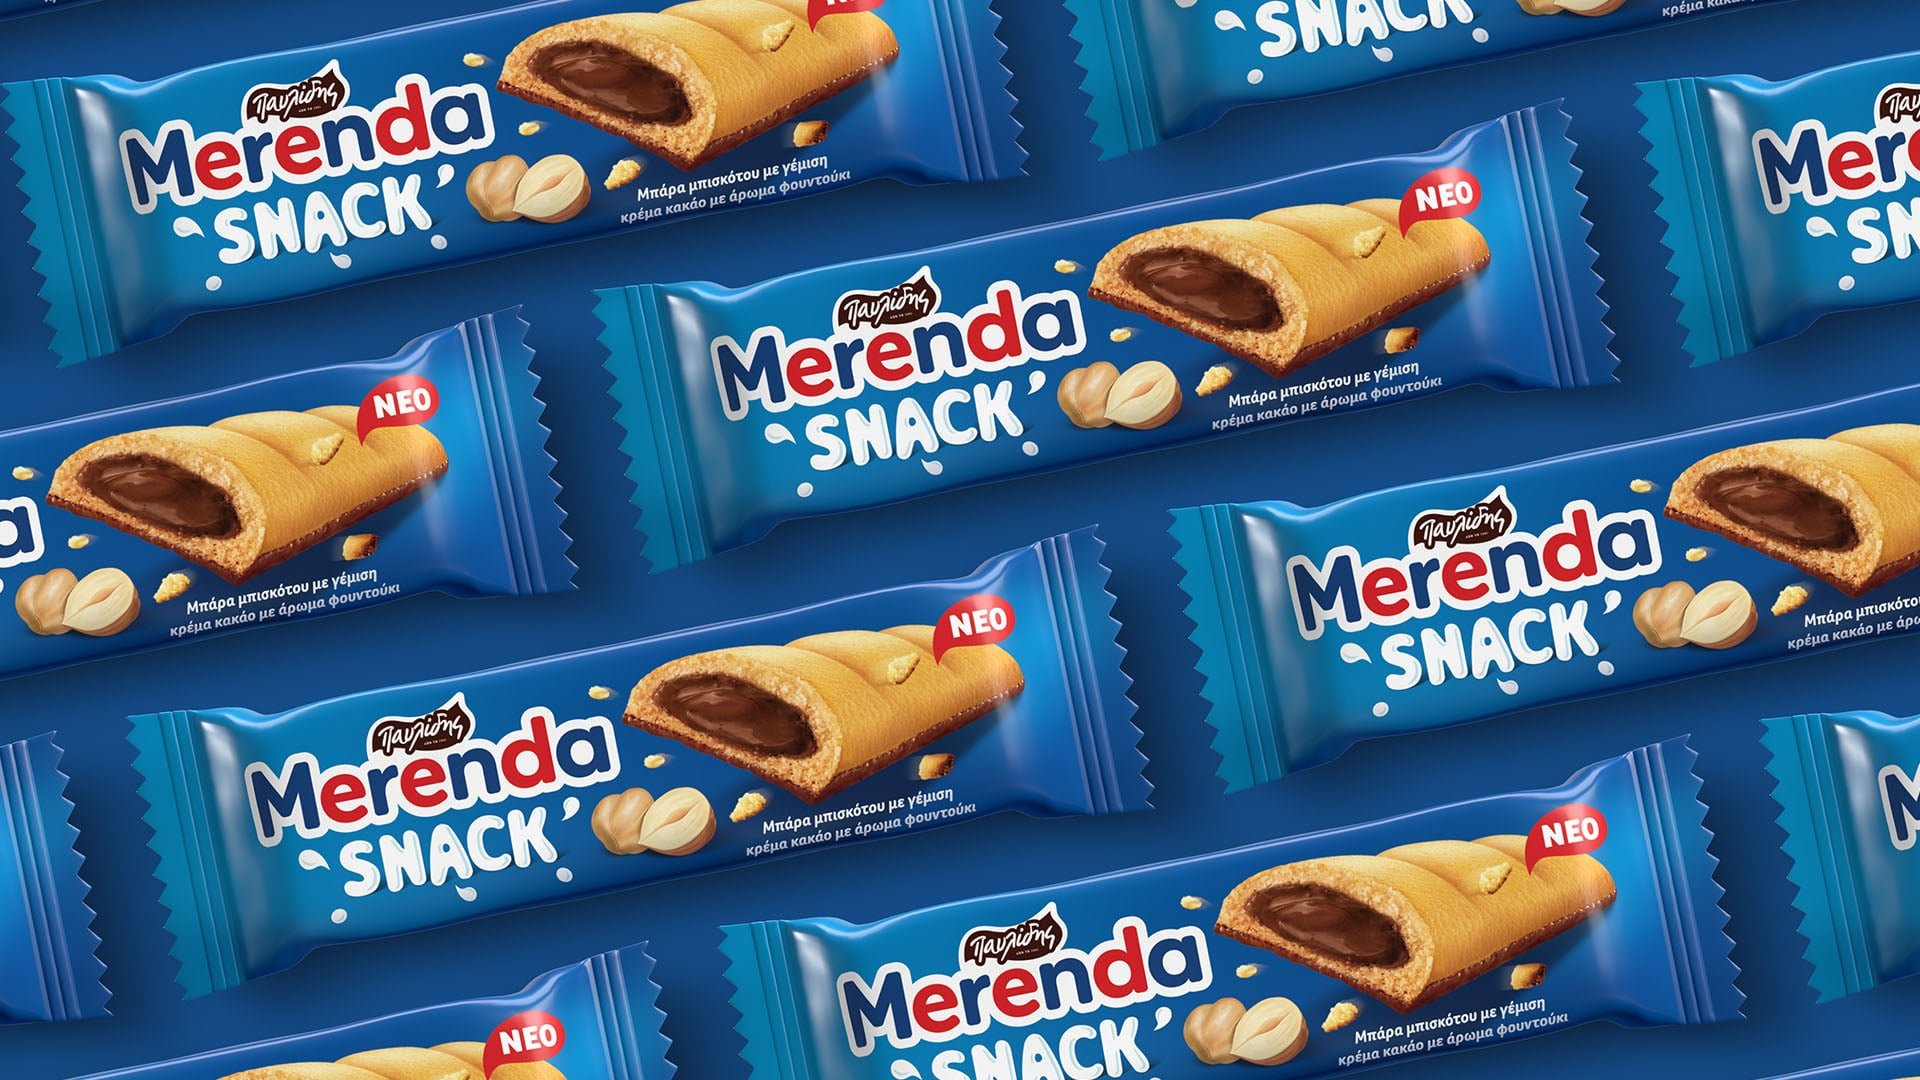 Merenda snack chocolate-biscuit bar multiple packages aligned